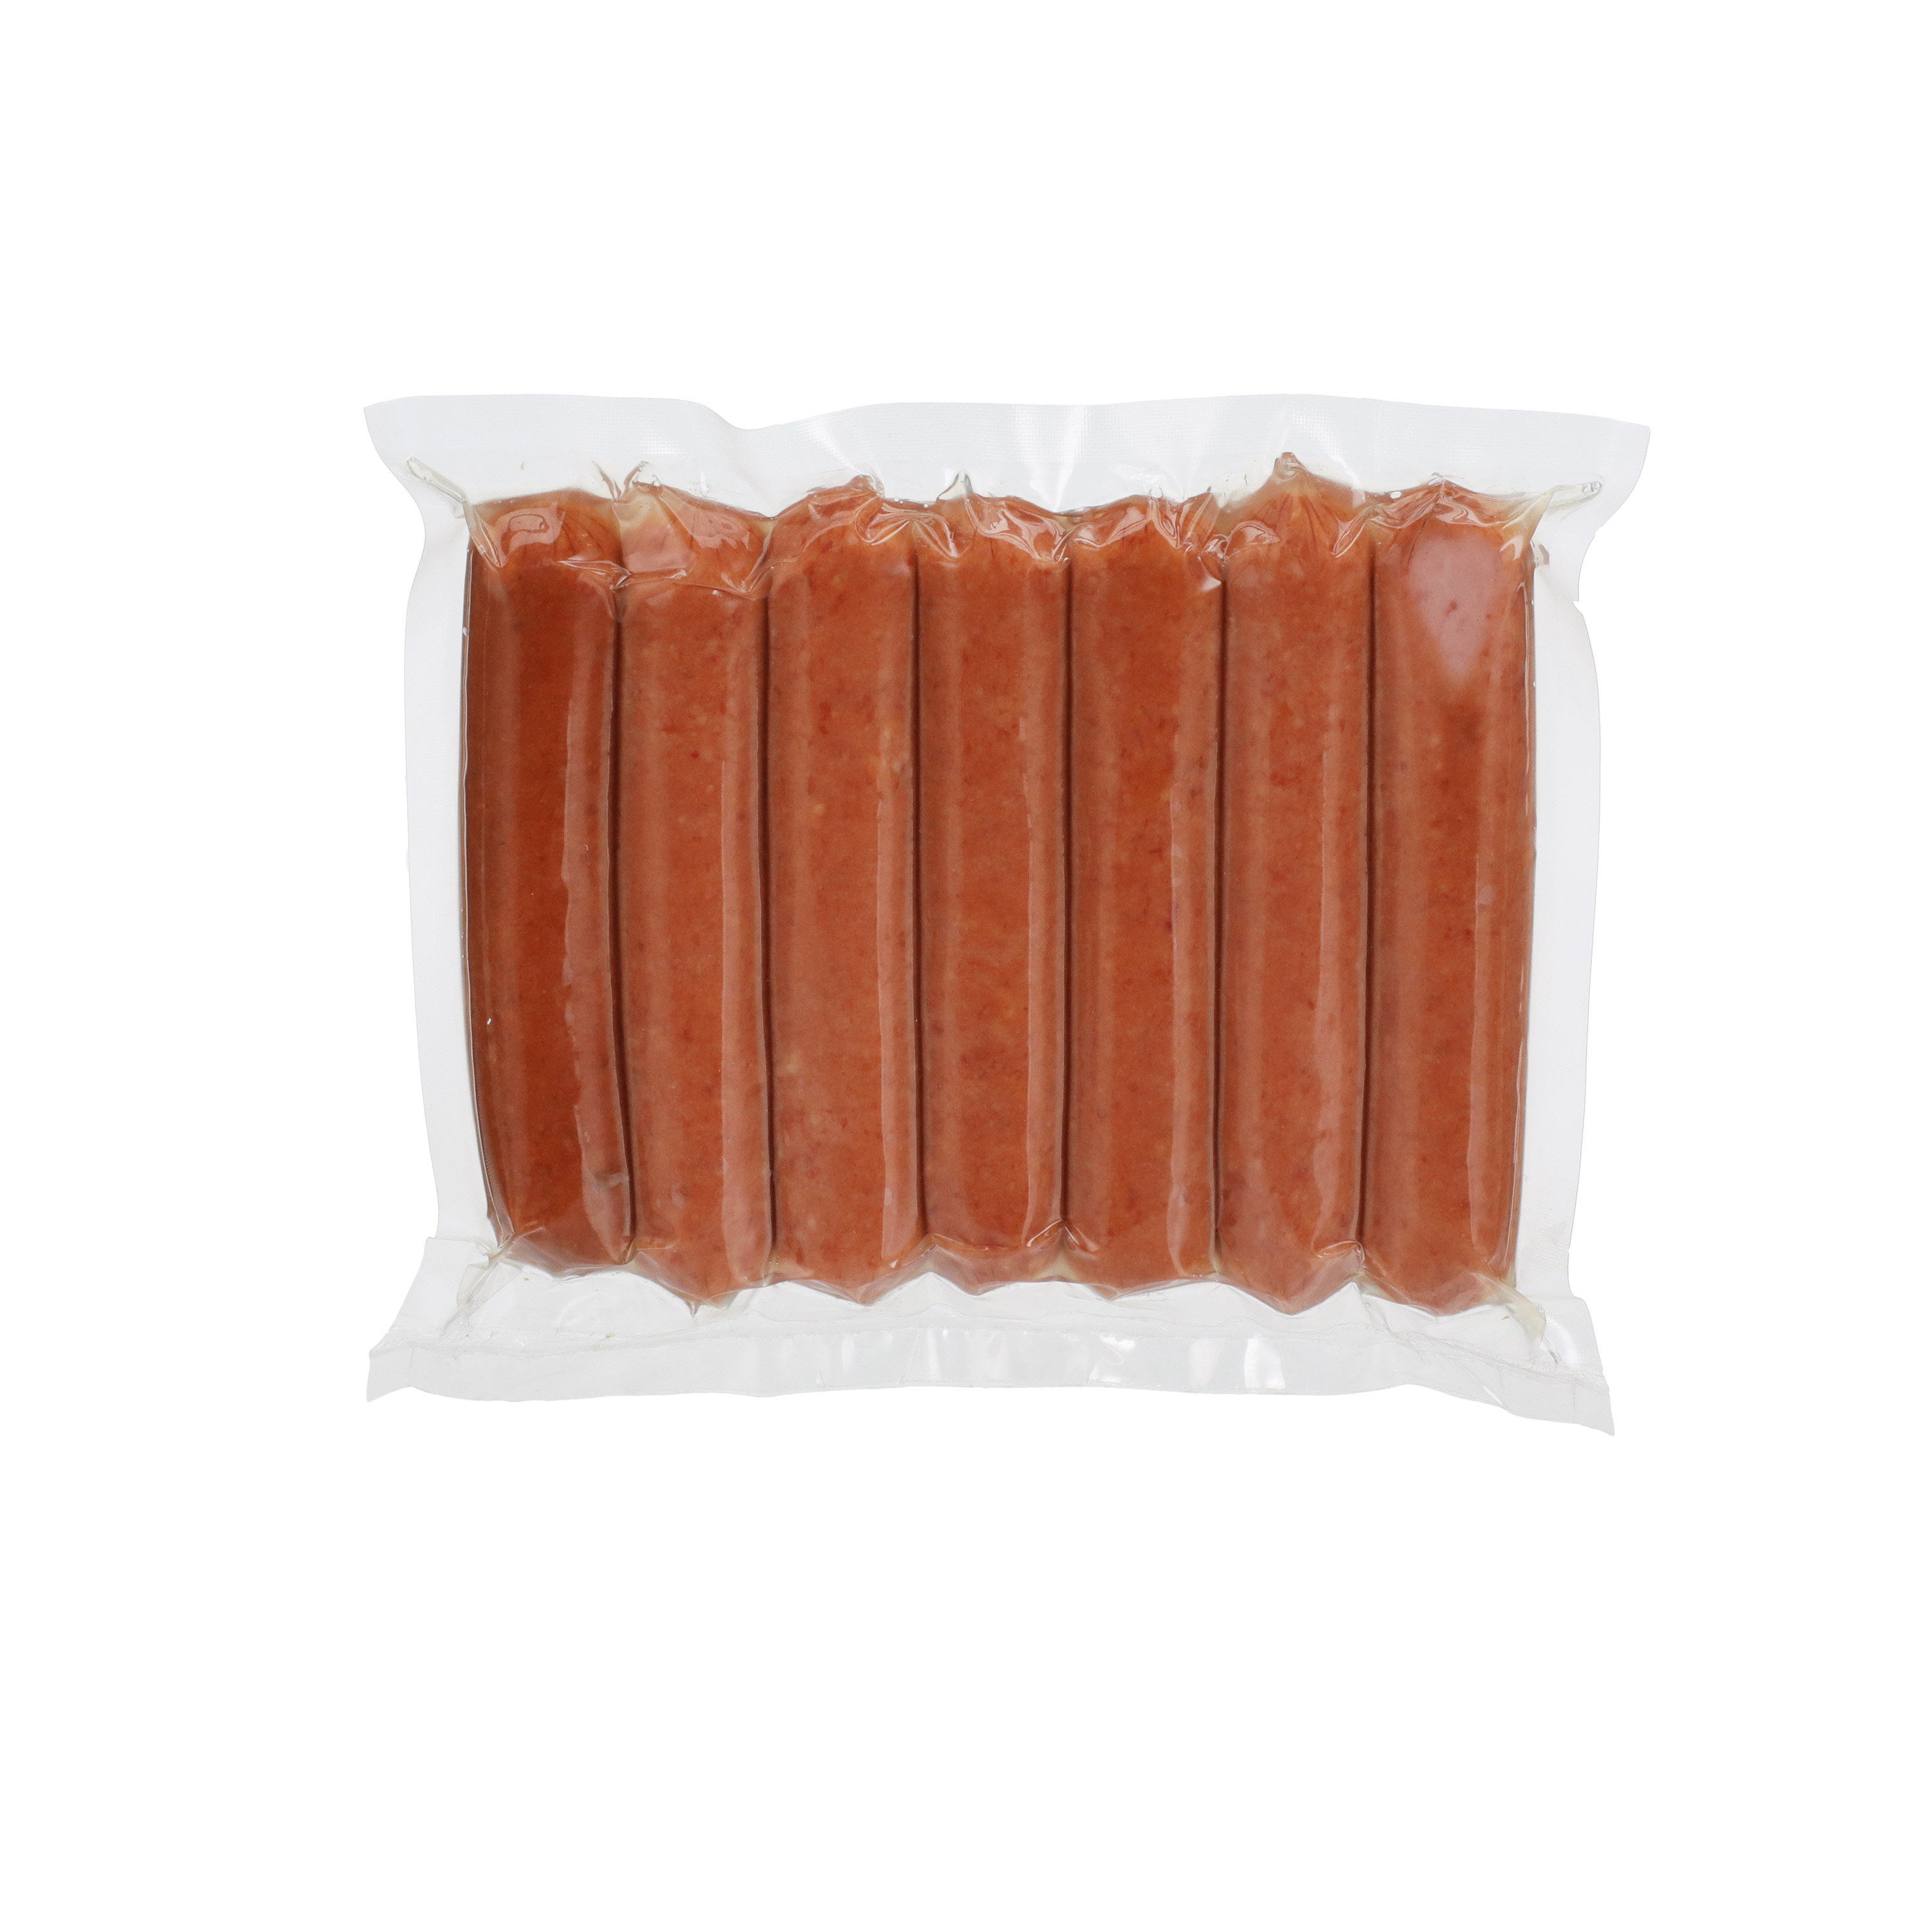 sausage supplies